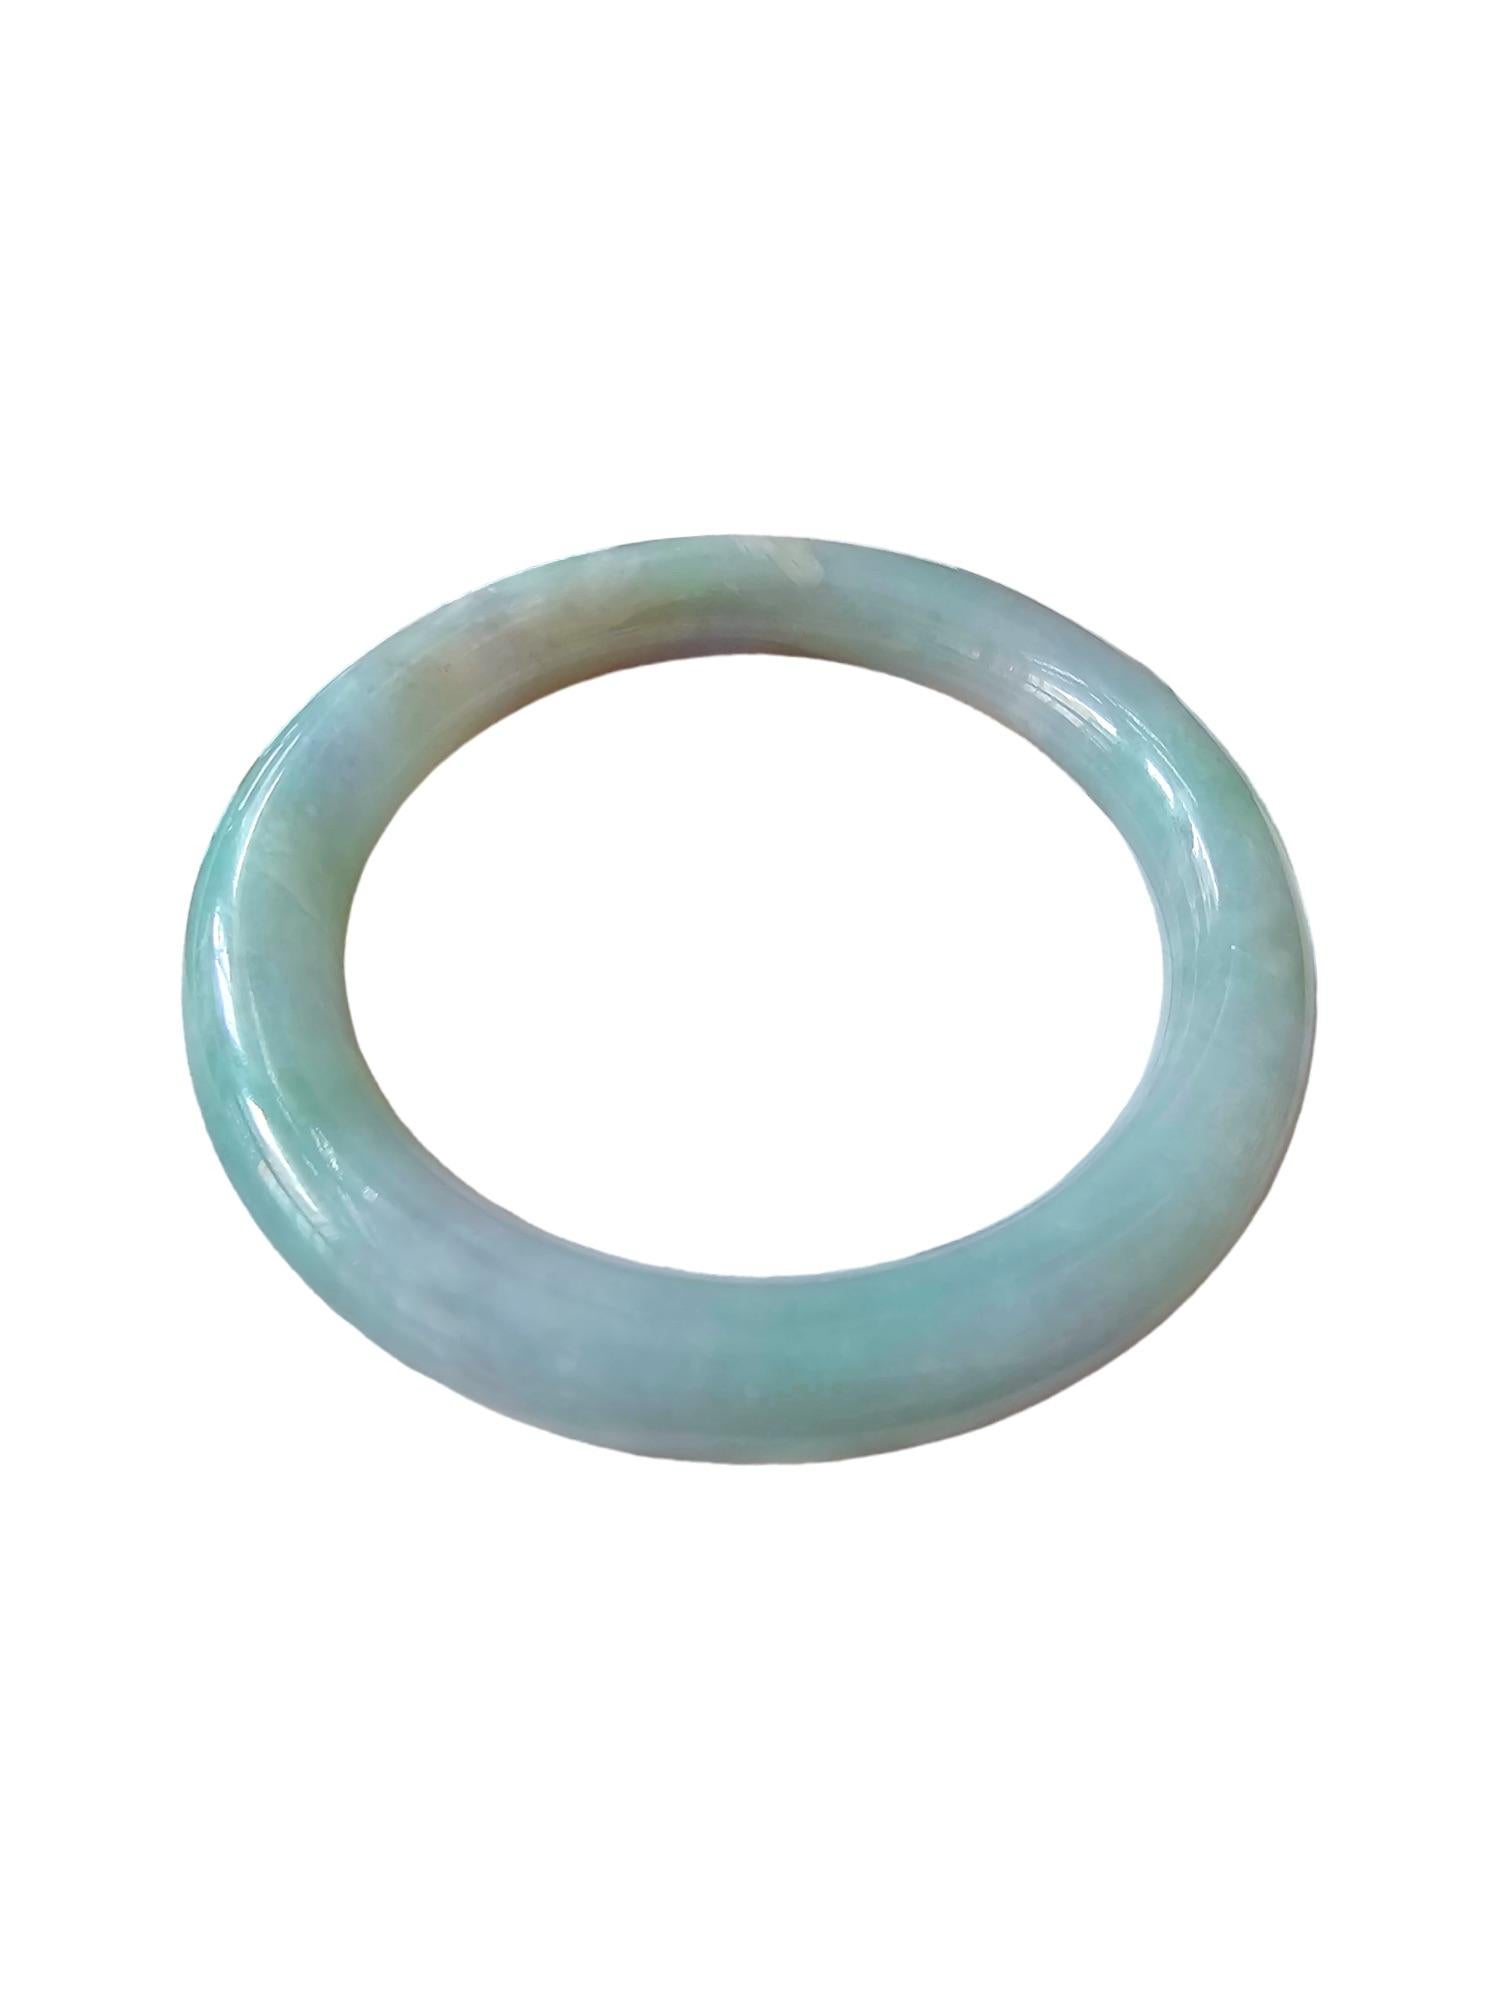 Earth's Burmese A-Jade Bangle Bracelet Green Jadeite 08810 For Sale 1